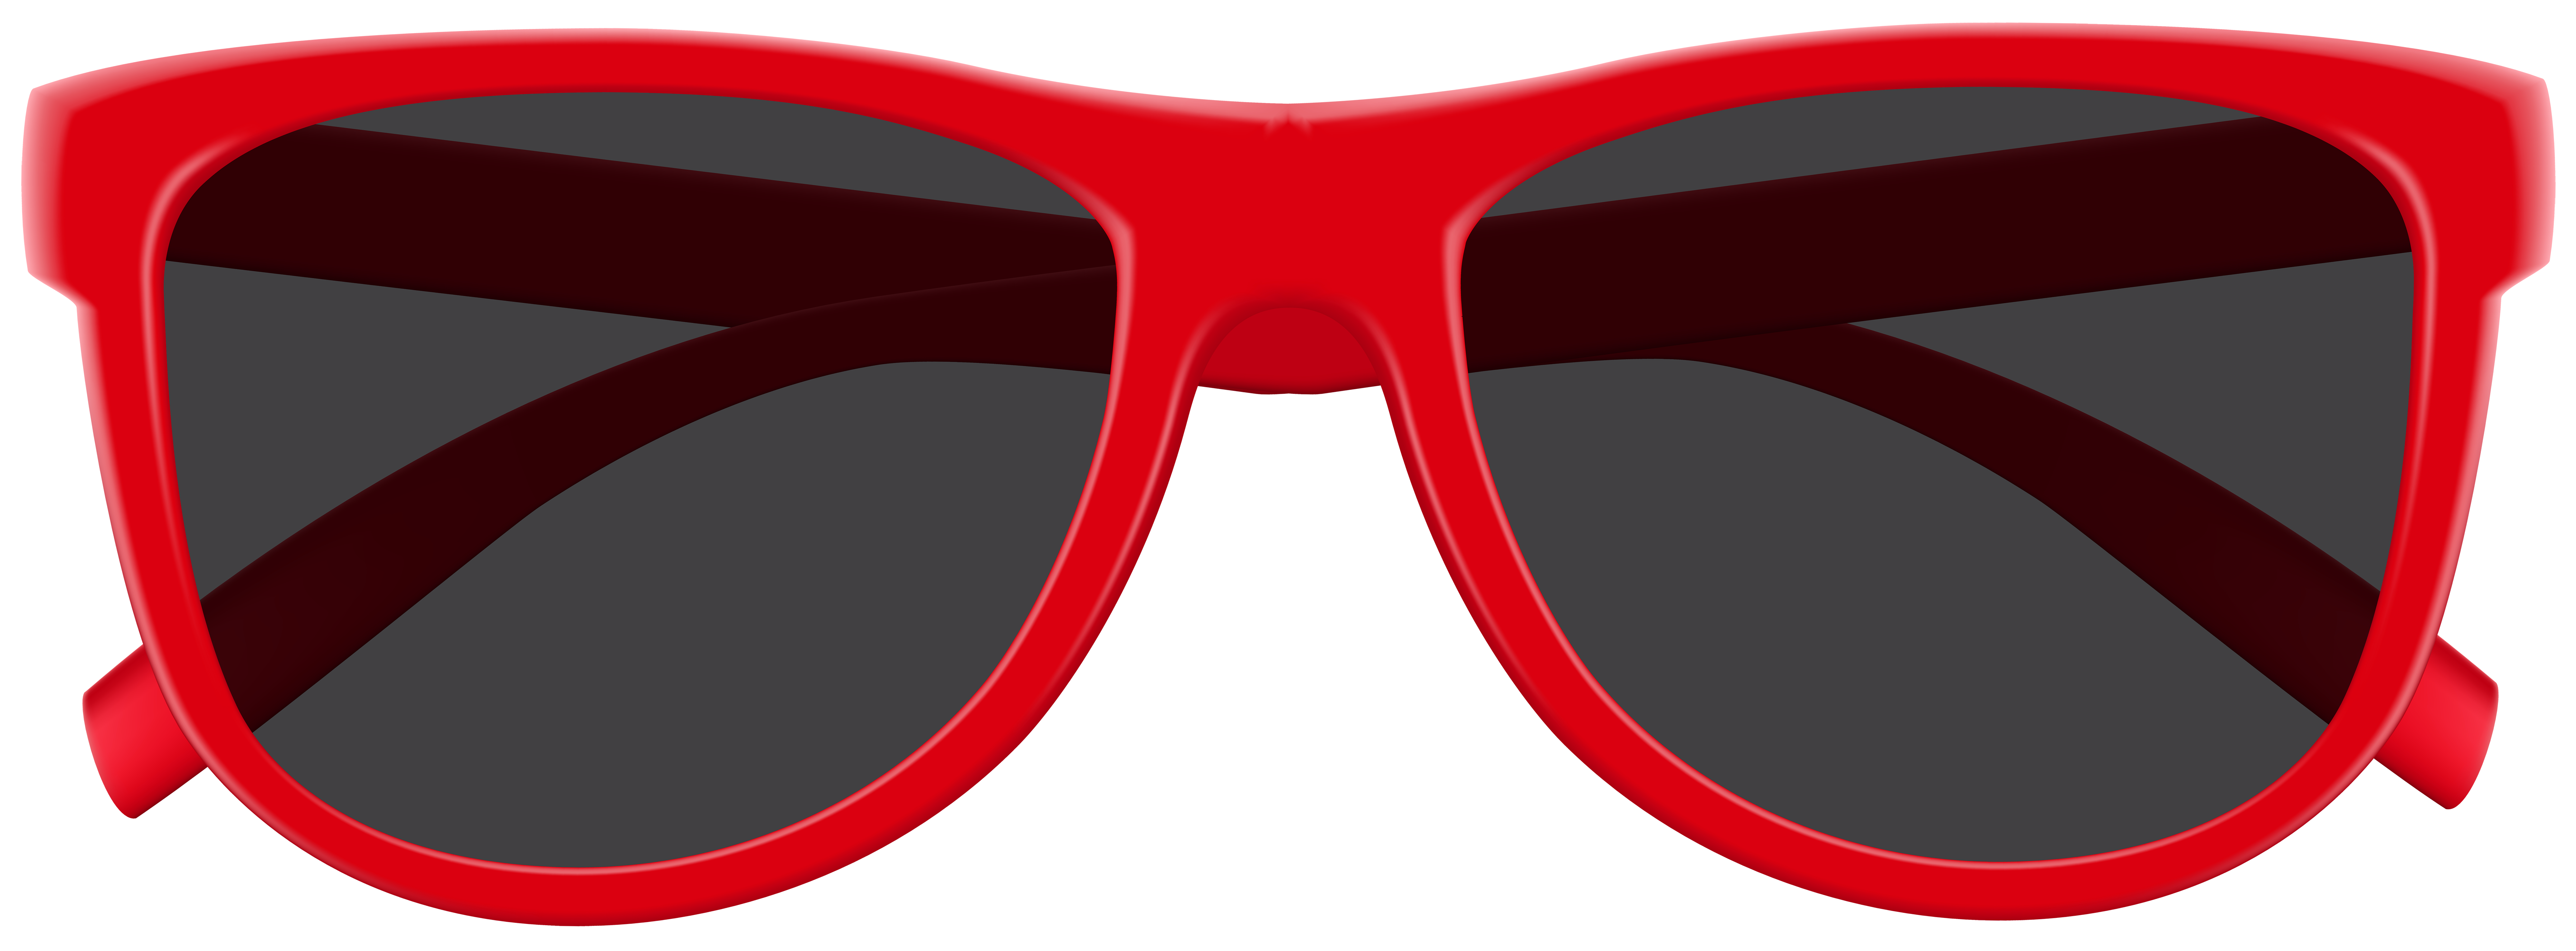 Sunglasses Eyewear Red Free HQ Image Clipart